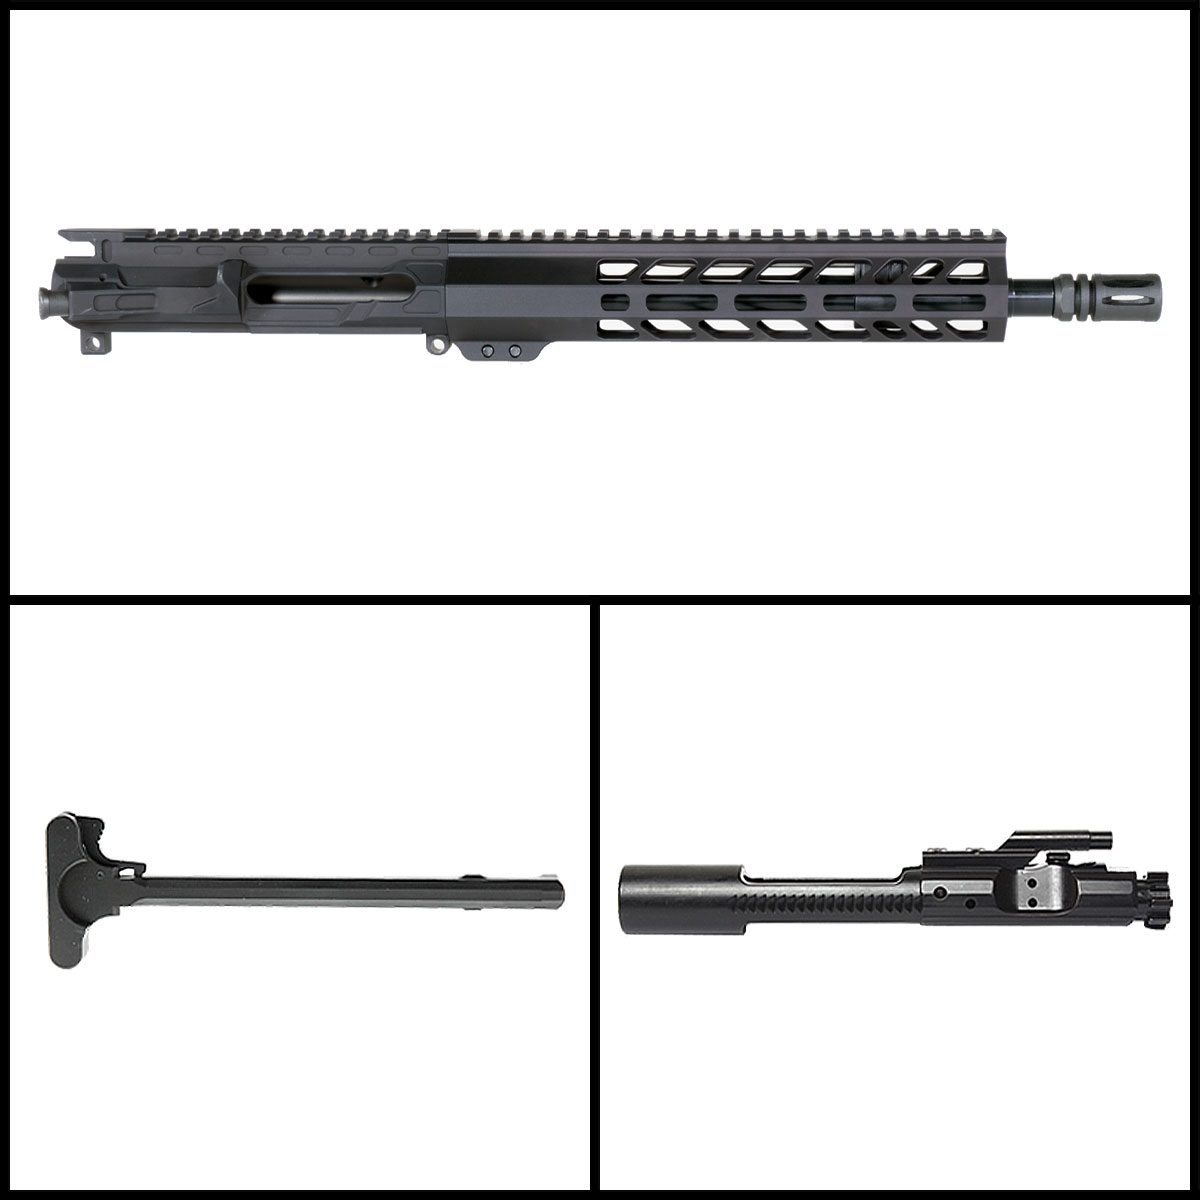 MMC 'The Gangster' 11.5-inch AR-15 5.56 NATO QPQ Nitride Pistol Complete Upper Build